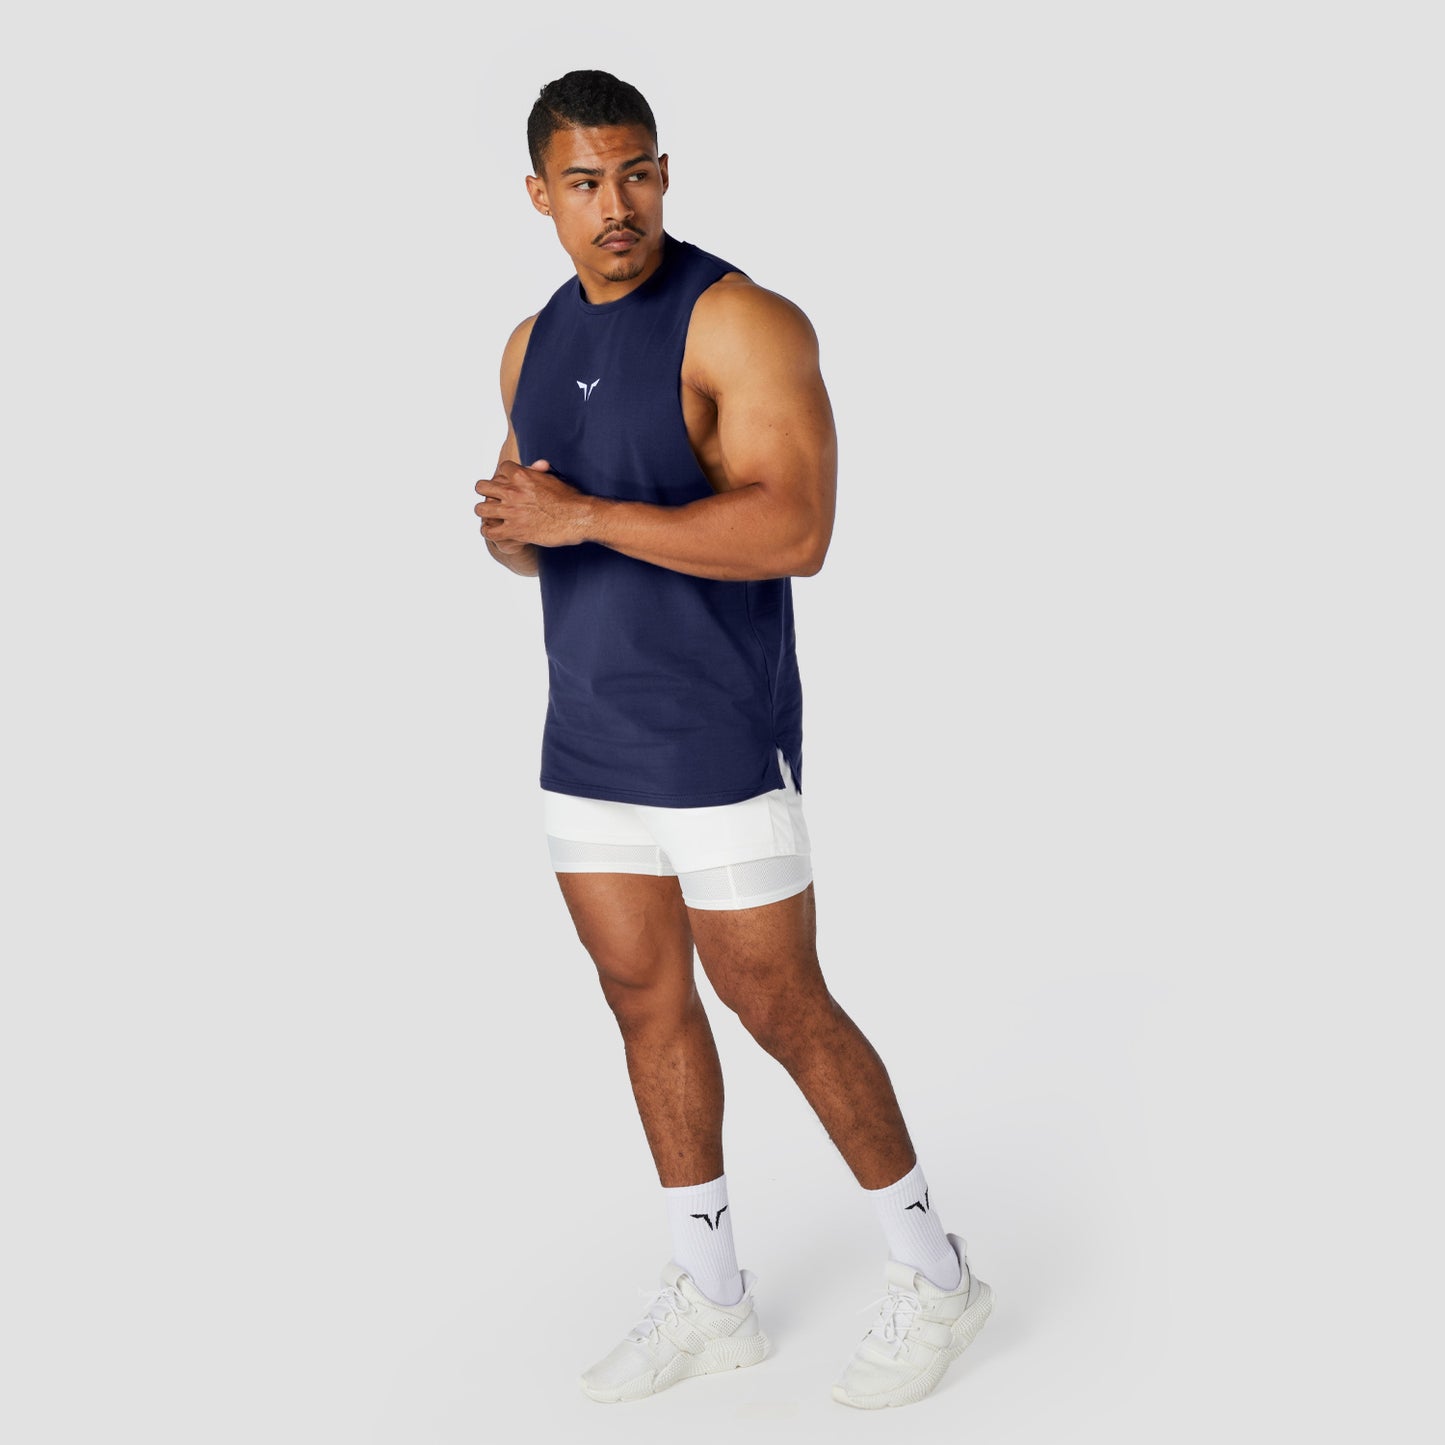 squatwolf-gym-wear-core-tank-navy-workout-tank-tops-for-men